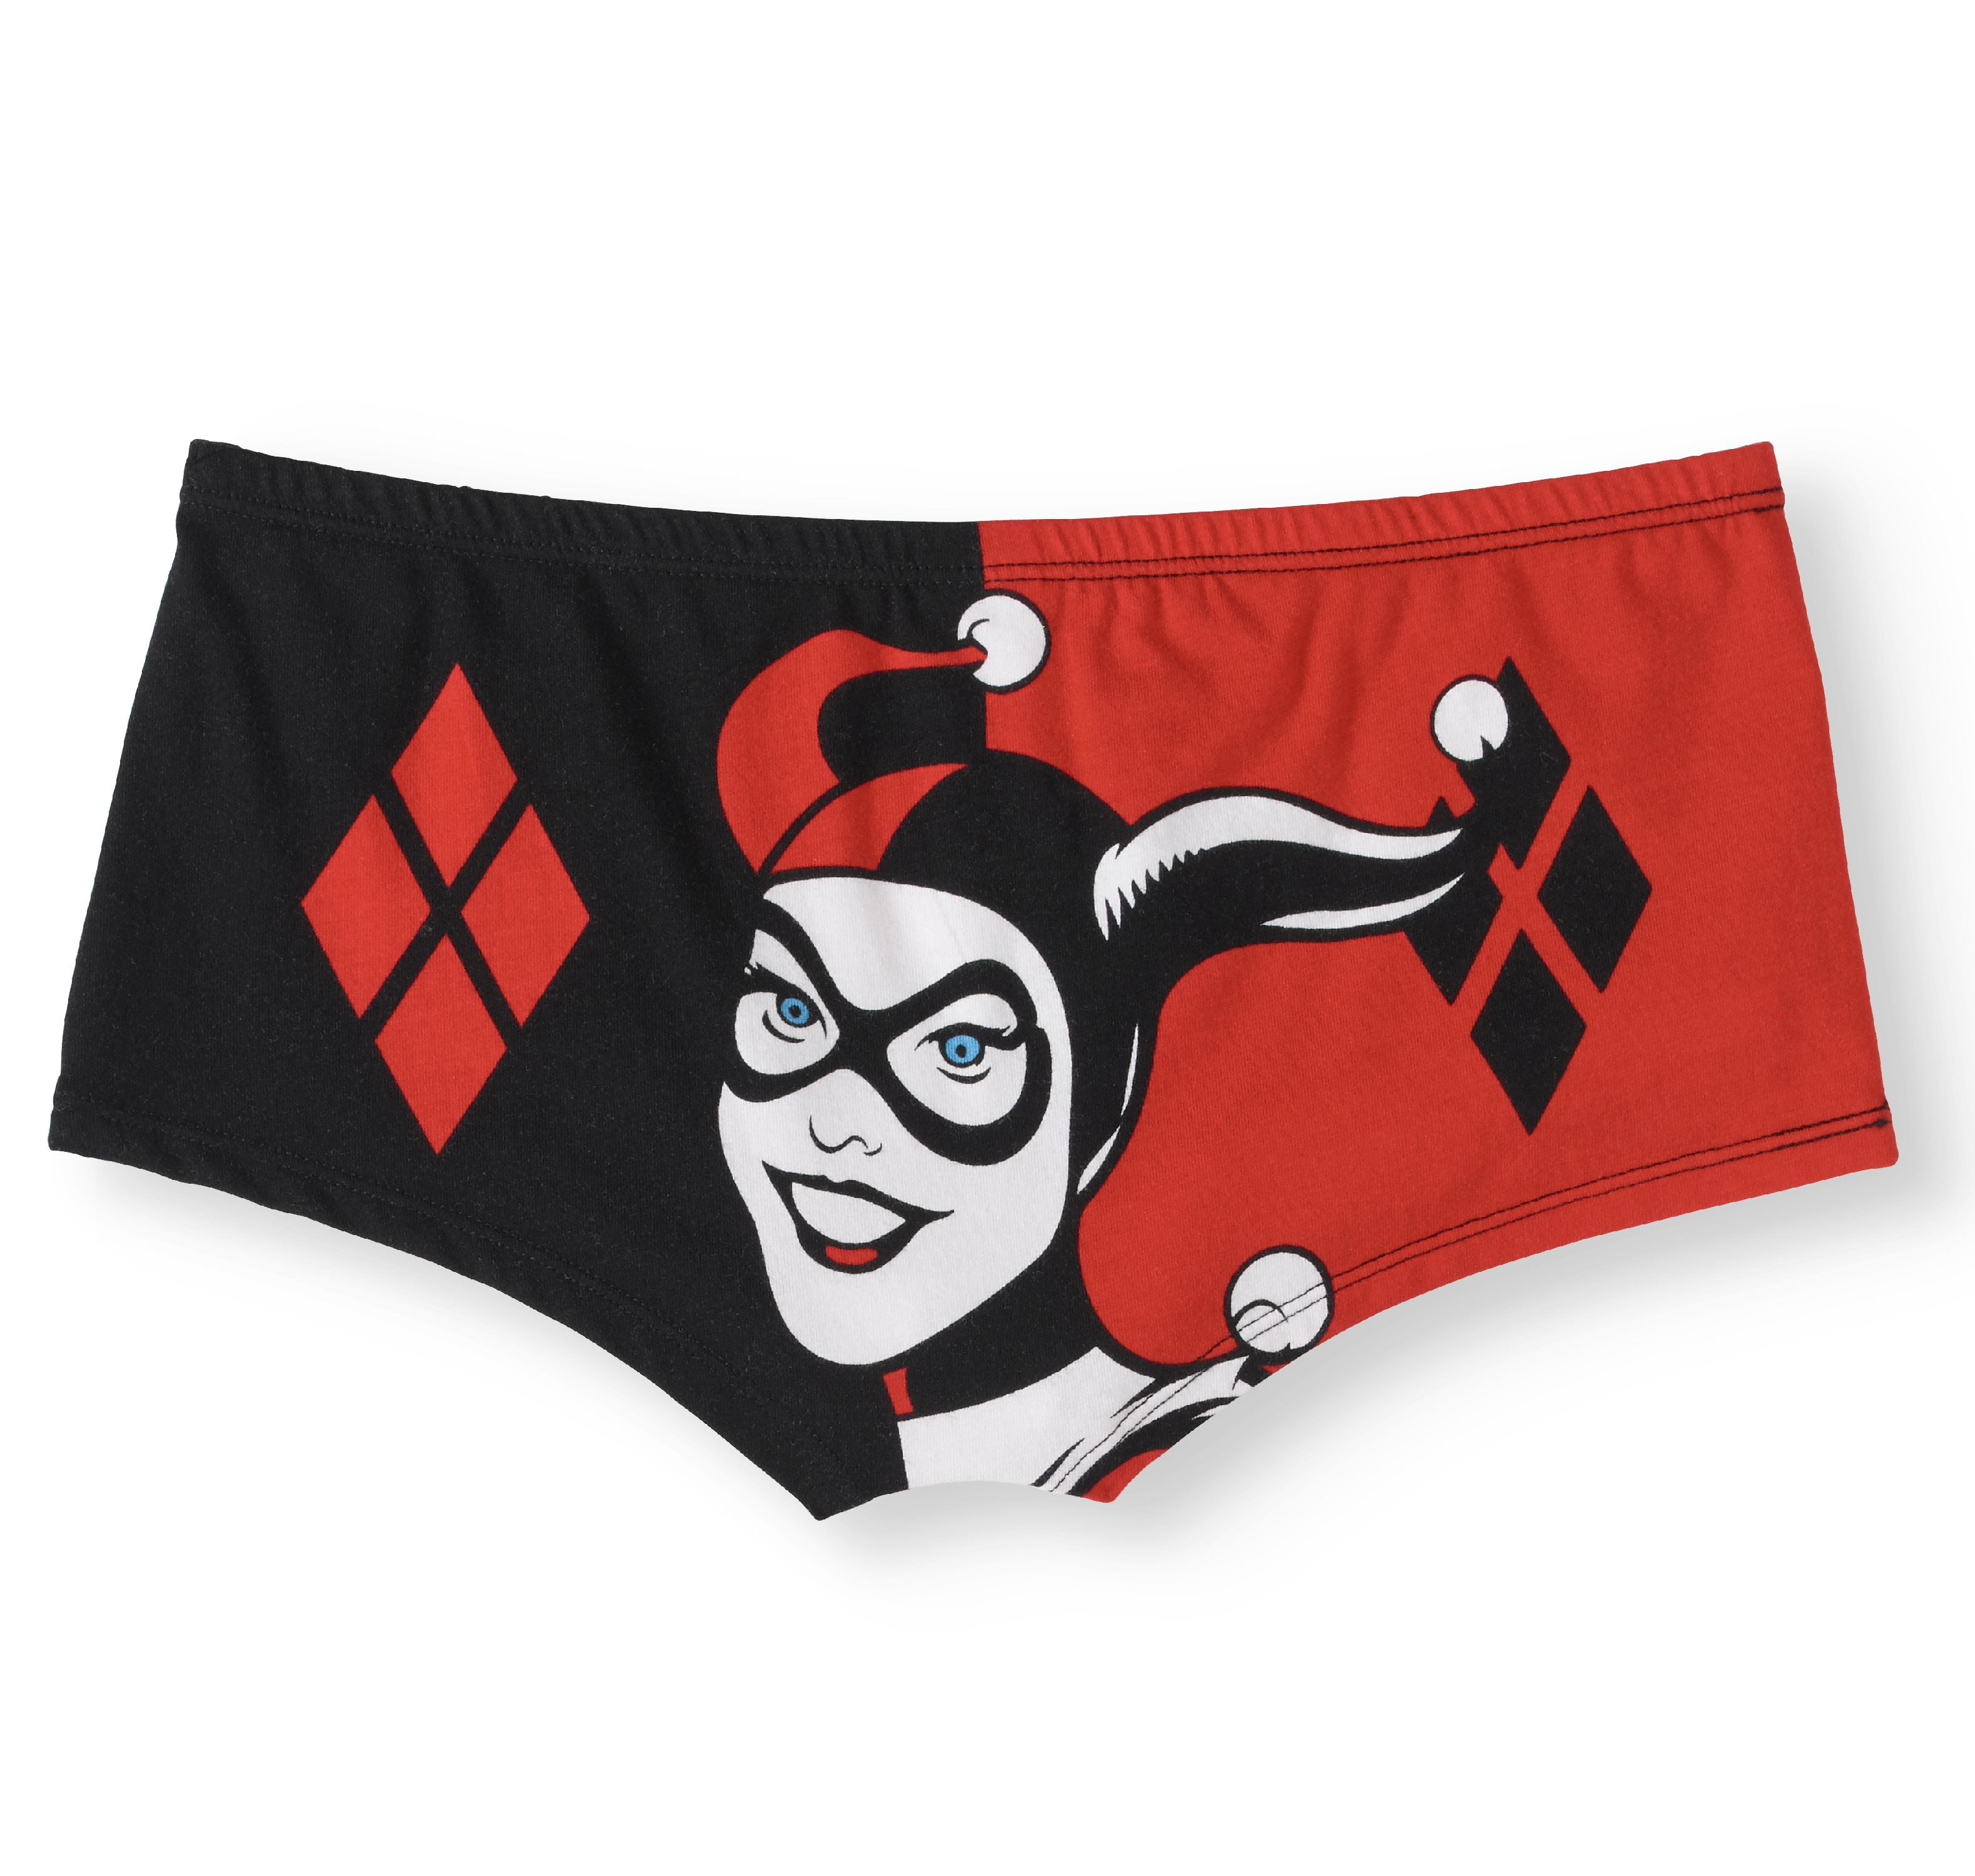 Joker Vs Harley Quinn Aero Boxer Briefs Underwear and Sock Set